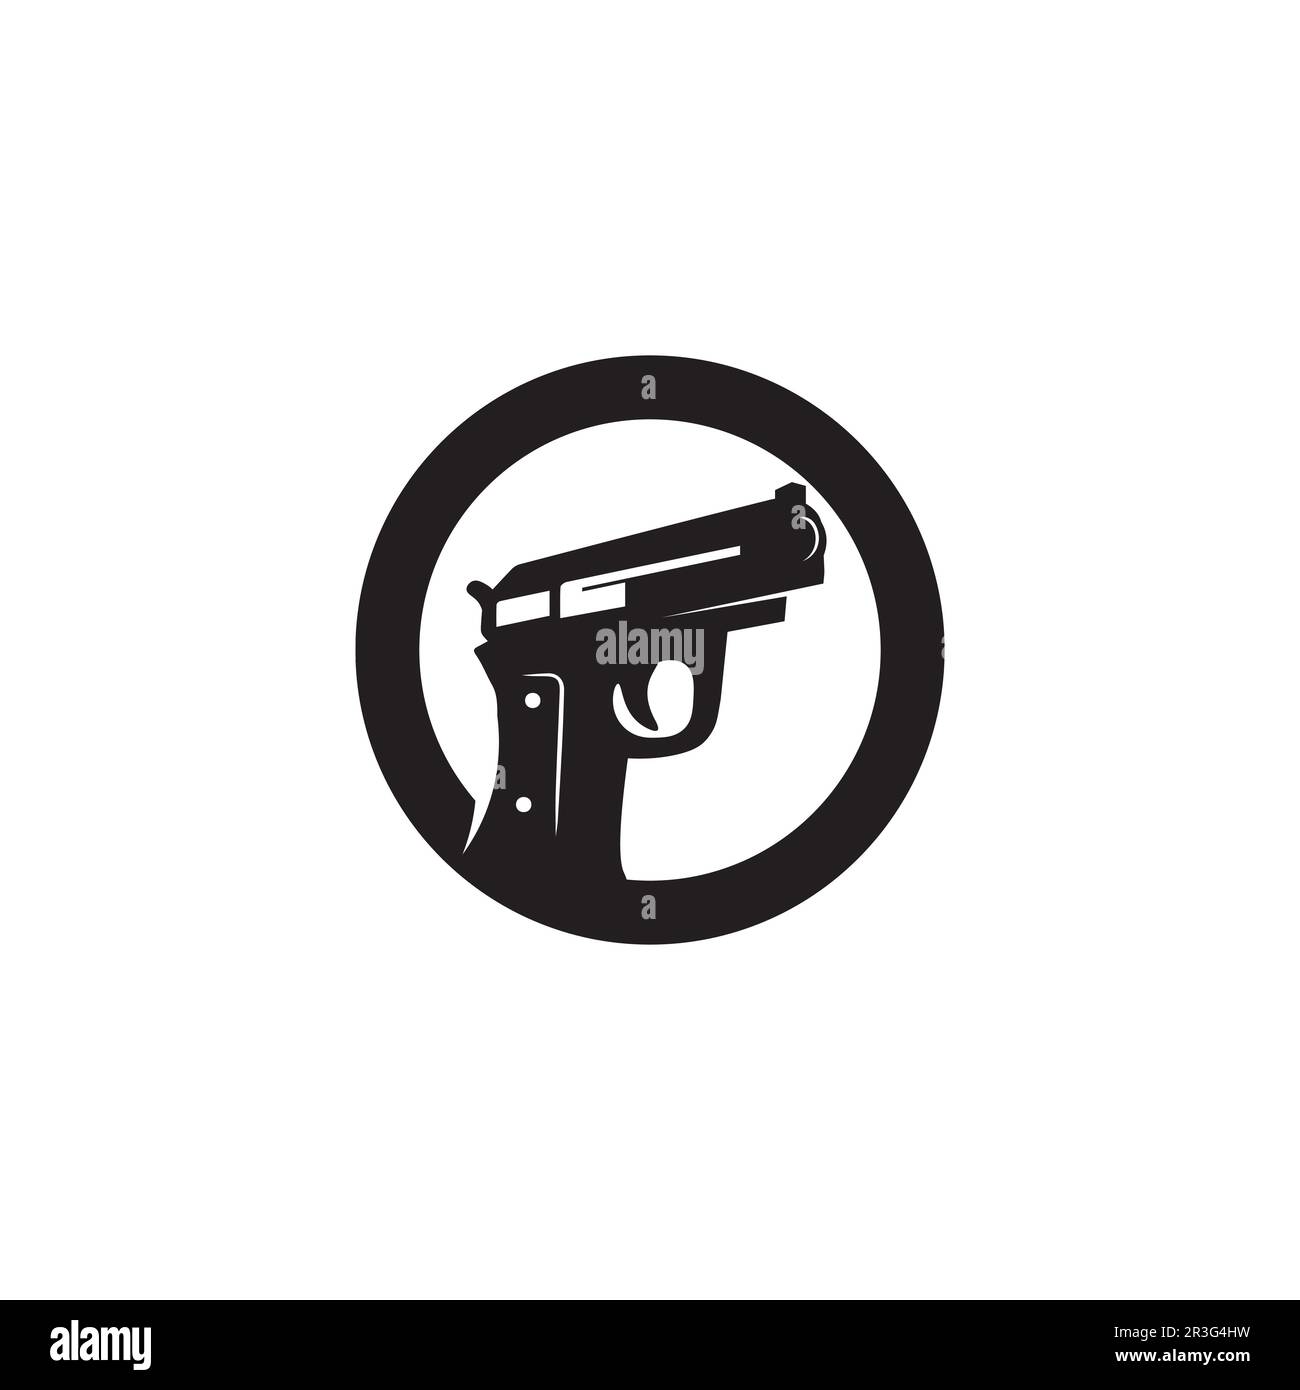 Logo de canon et fusil de sniper de soldat de l'Armée de terre vecteur de tir Design Illustration militaire revolver de tir Illustration de Vecteur